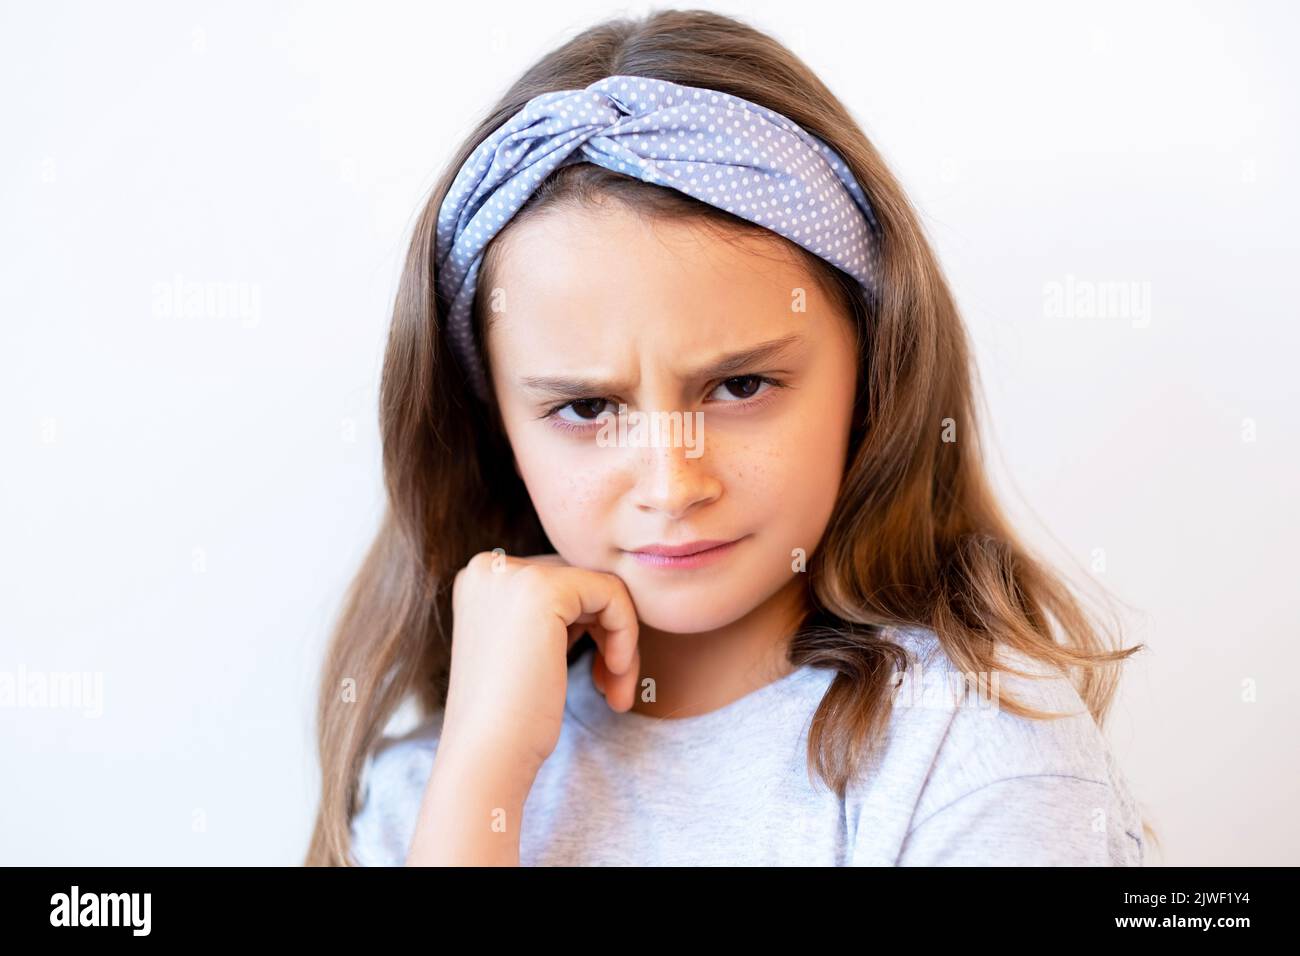 offended kid portrait unhappy stubborn girl face Stock Photo